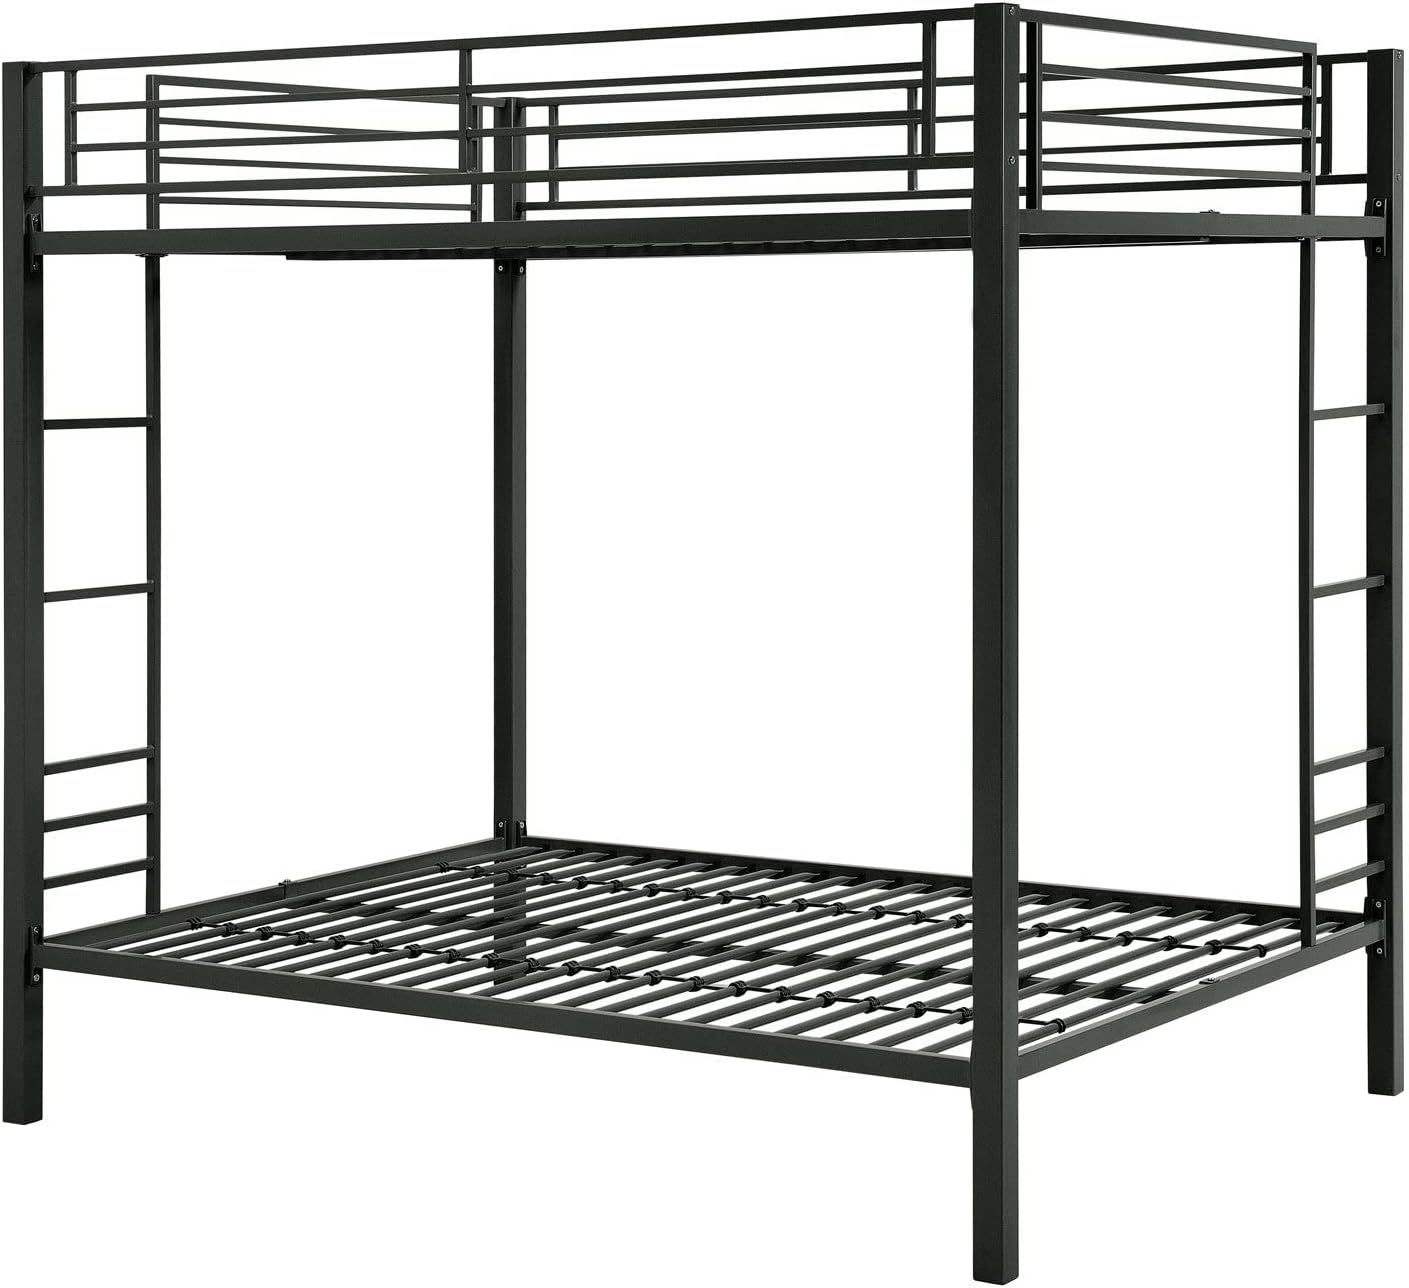 DHP Full over Full Bunk Bed for Kids, Metal Frame with Ladder (Black)